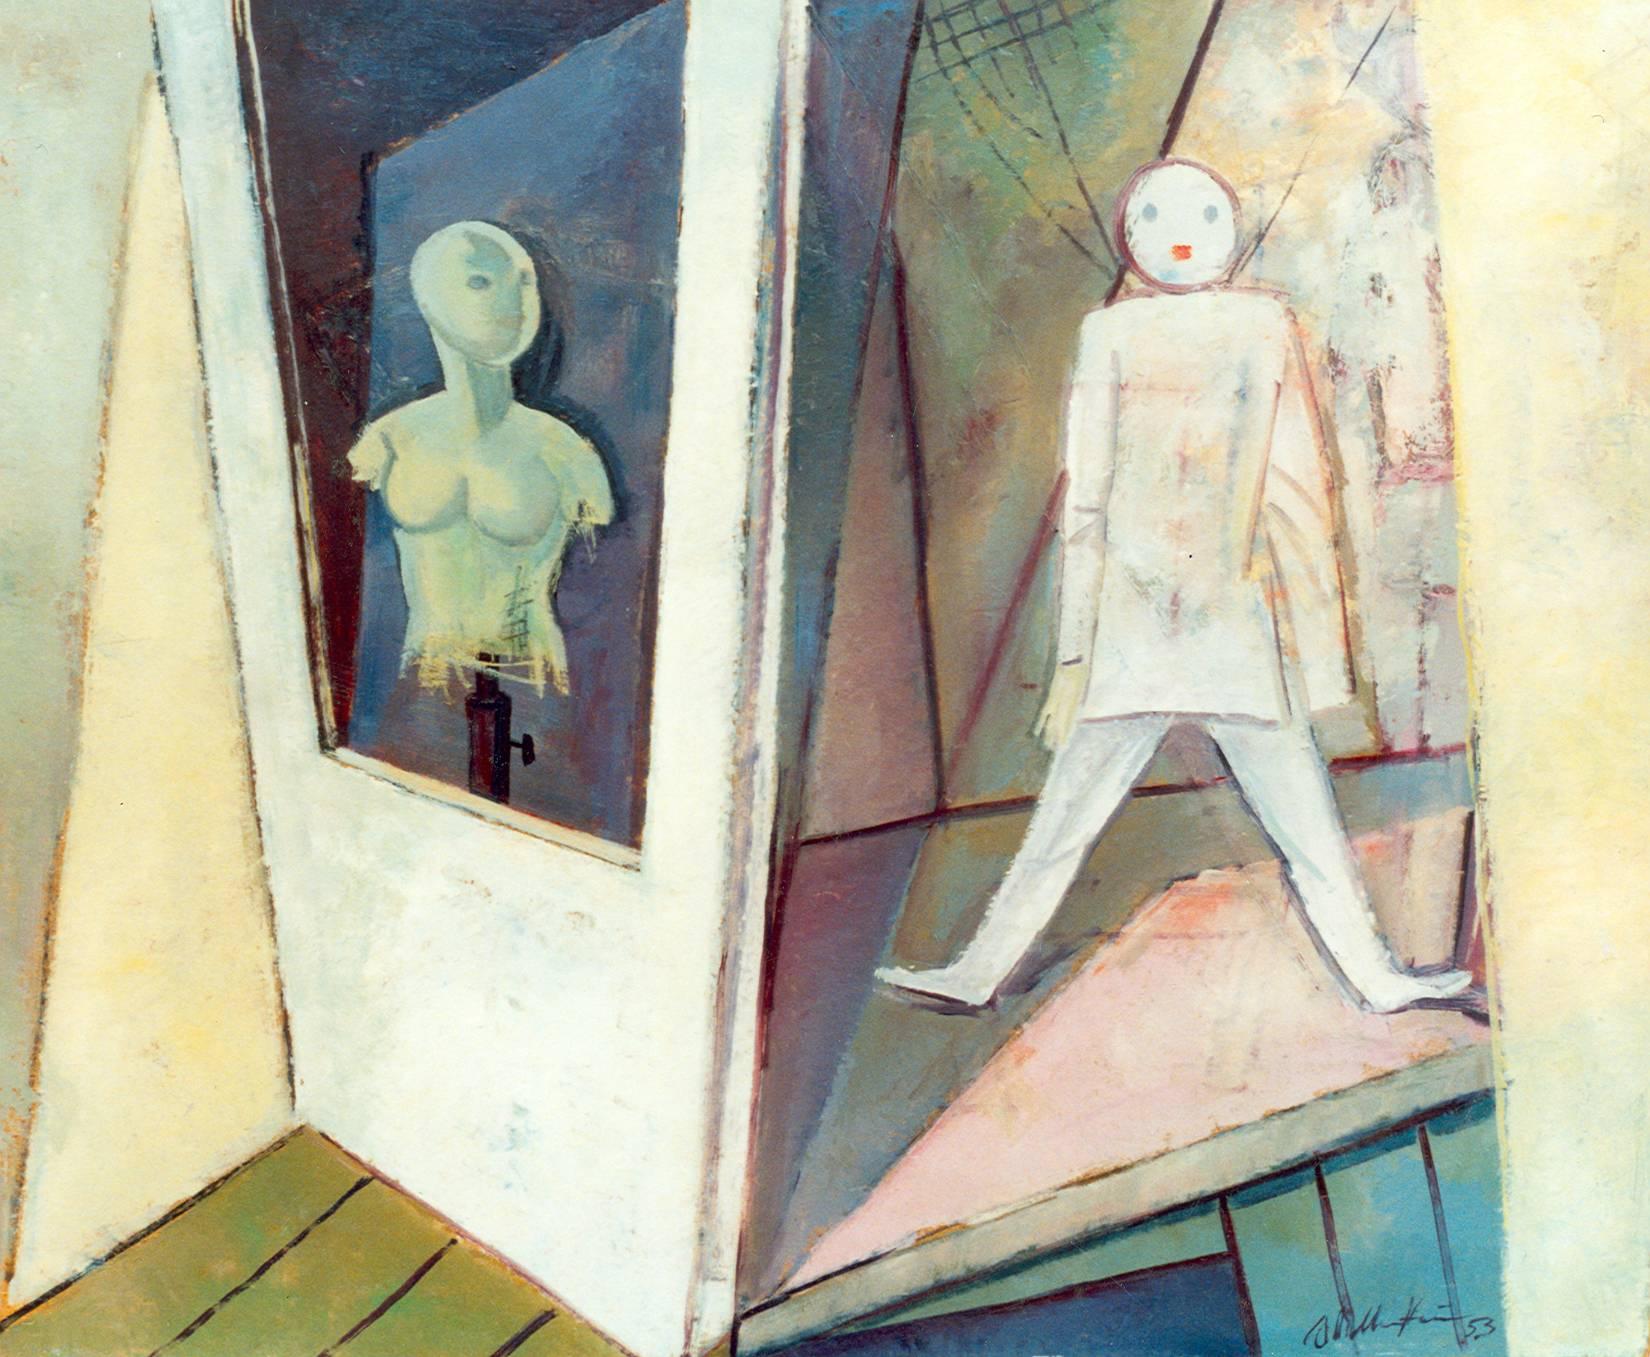 Walter Wellenstein Oil Painting "Bodenraum" ( Floor Space ) 1953